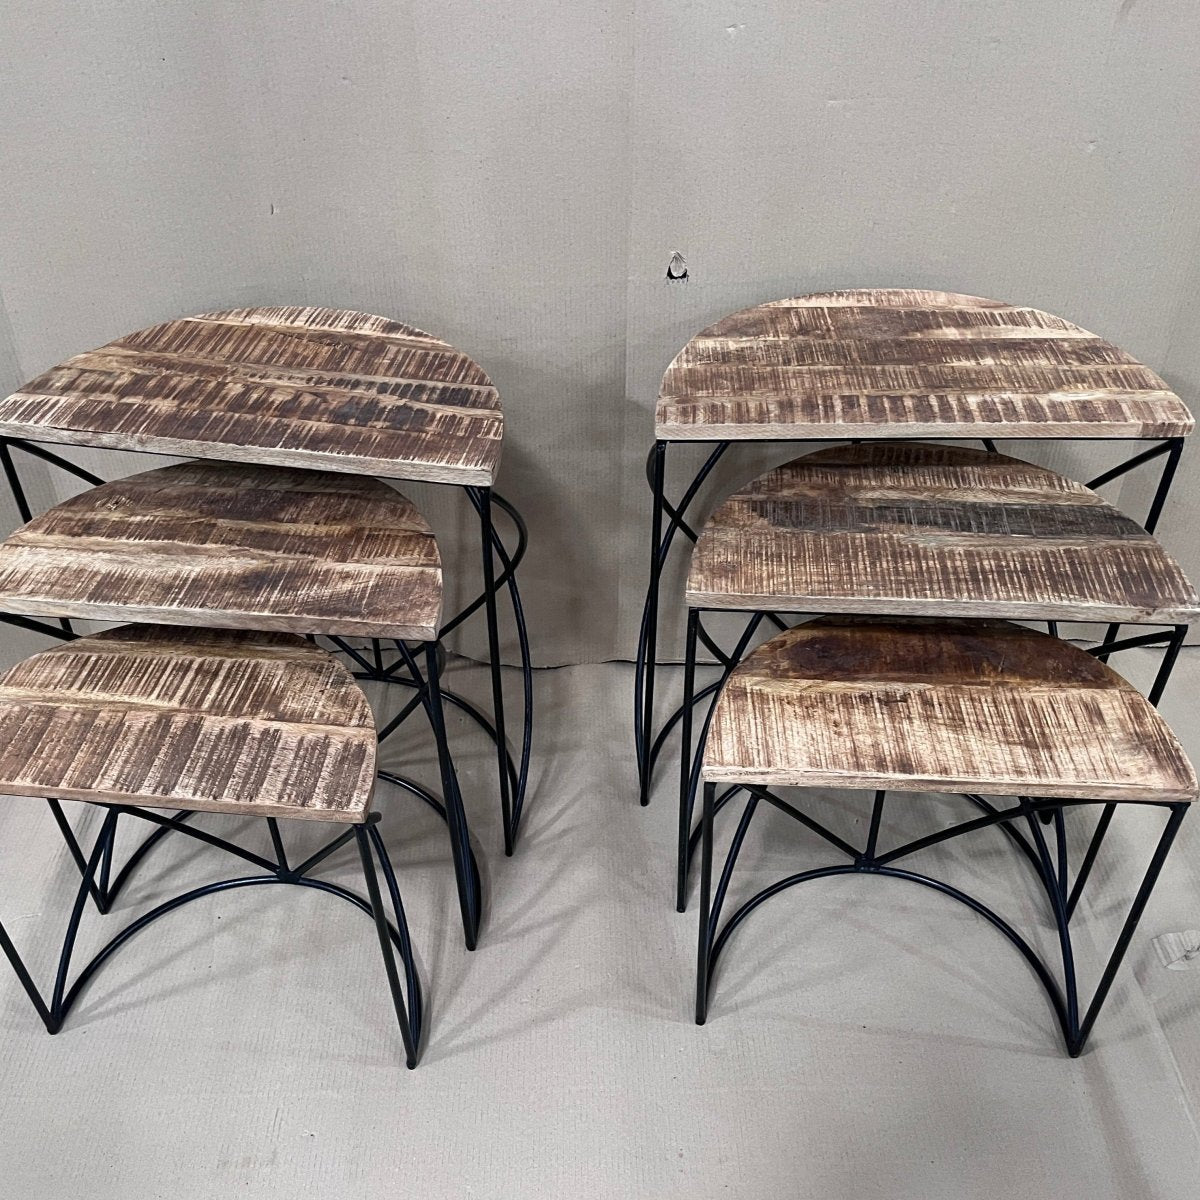 Trivi set of 3 nesting end tables - Rustic Furniture Outlet